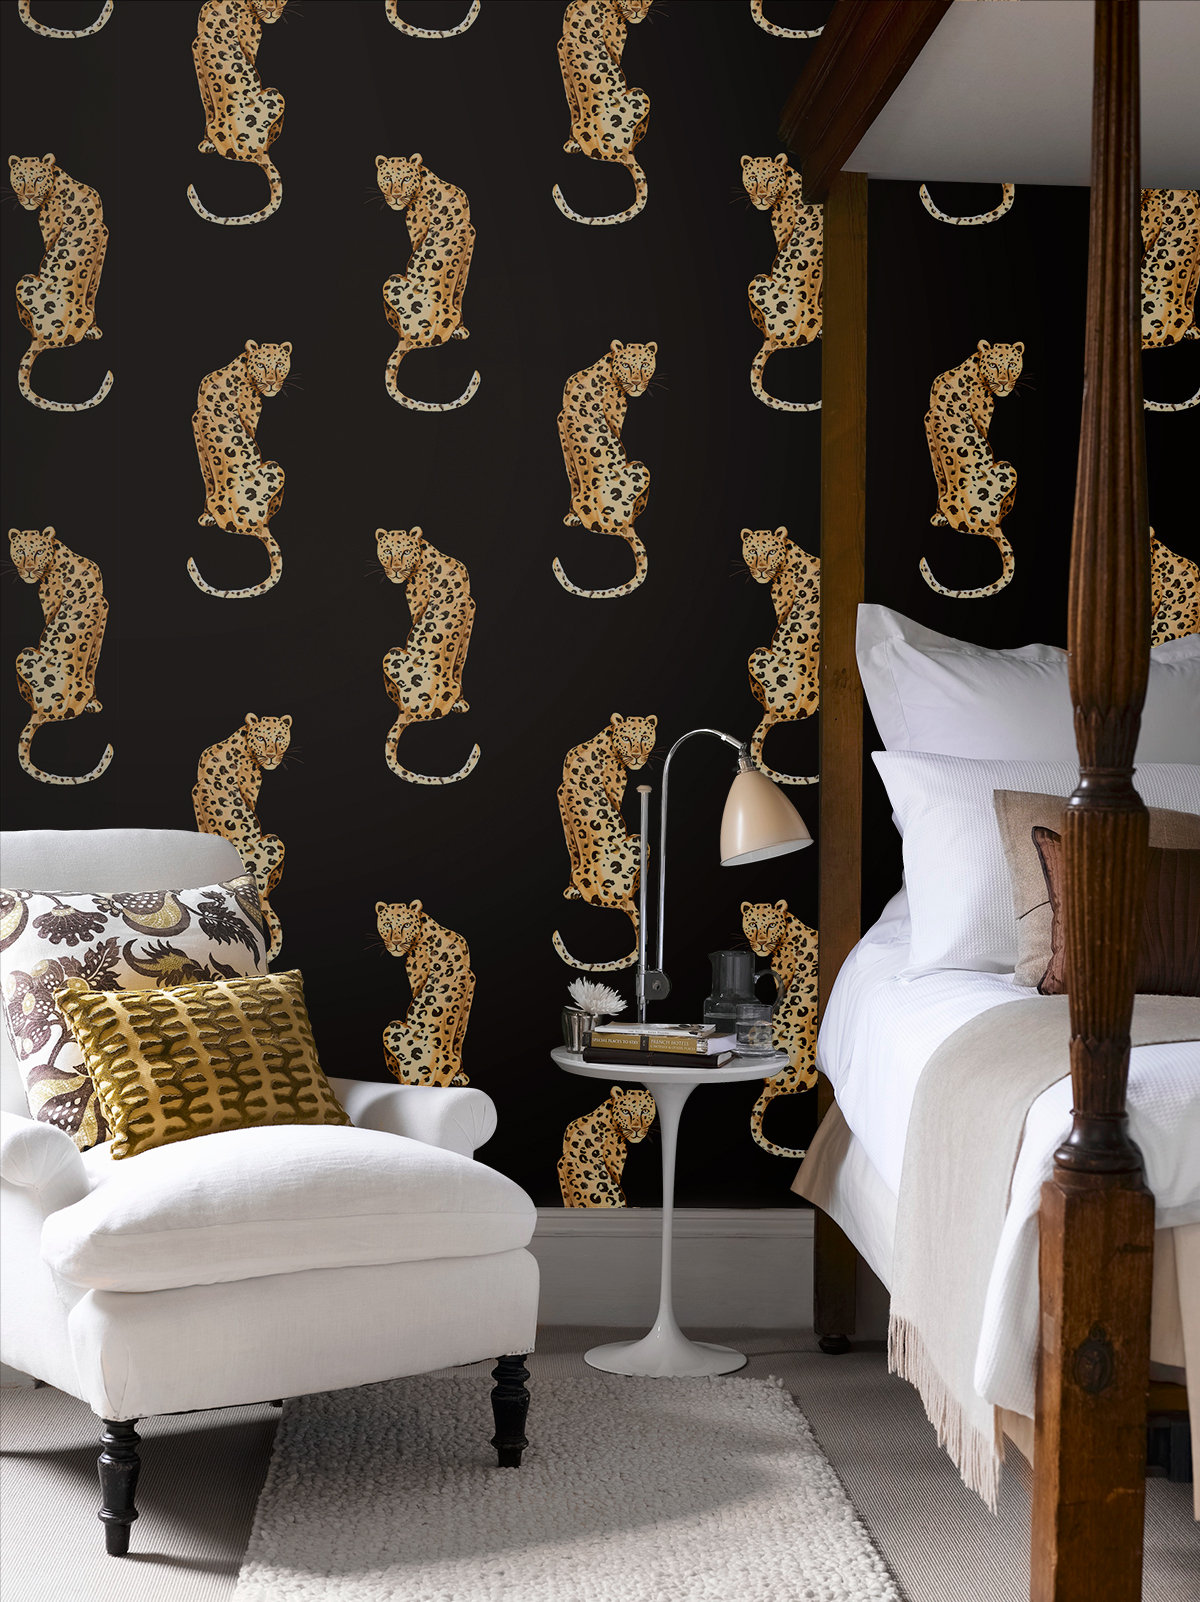 Animal Print Leopard Wallpaper - Peel and Stick